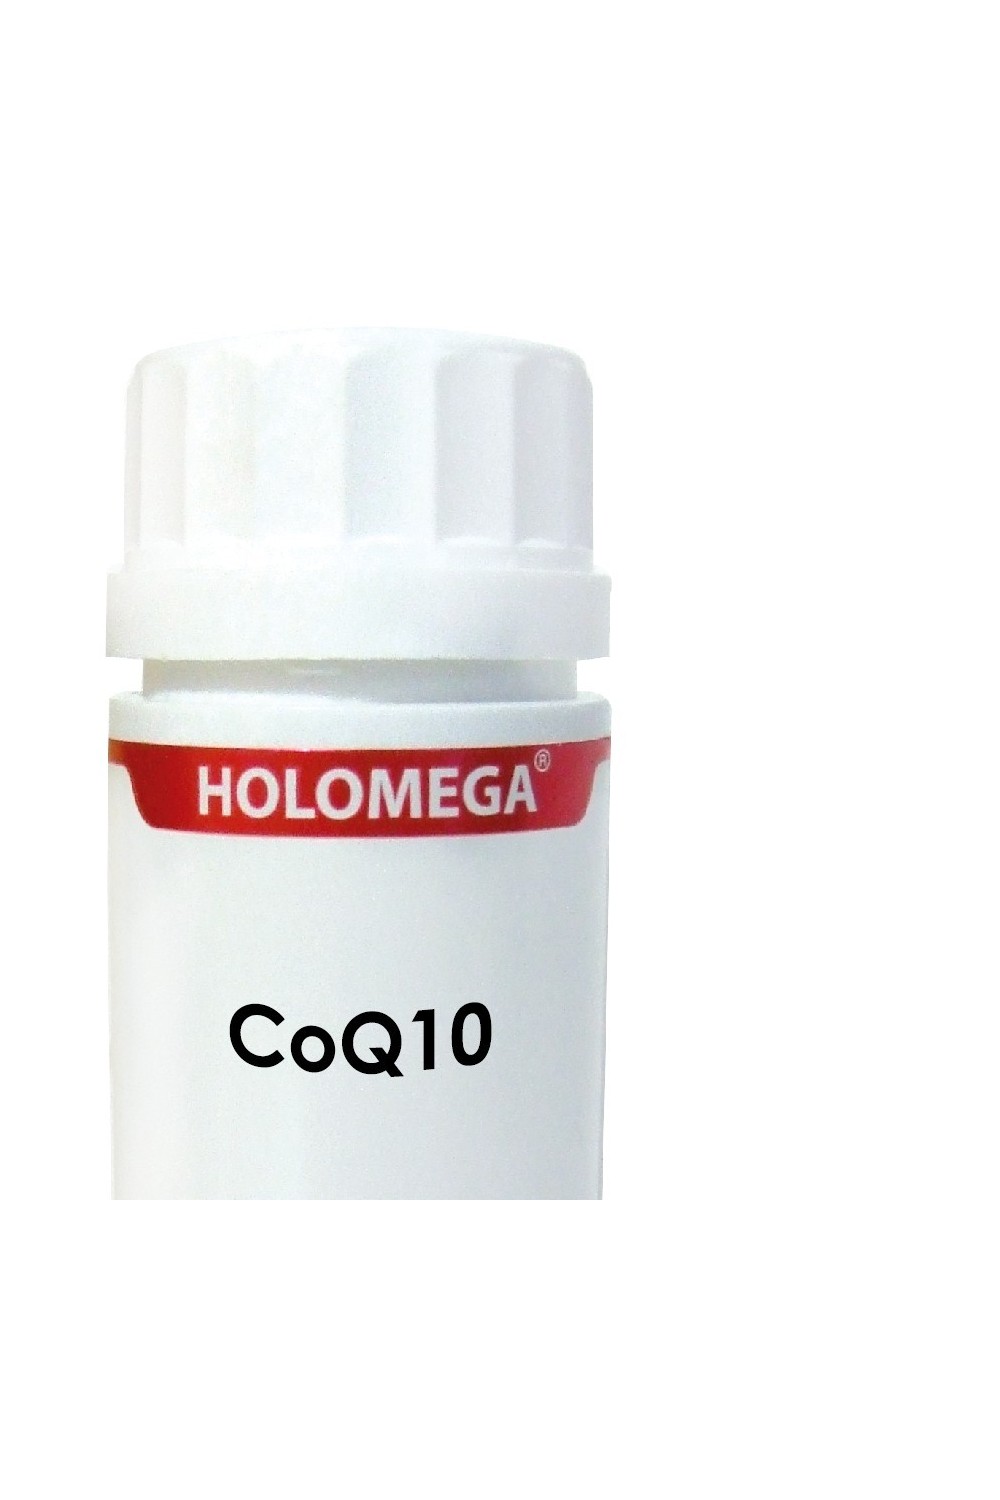 Equisalud Holomega Coq10 50 Caps